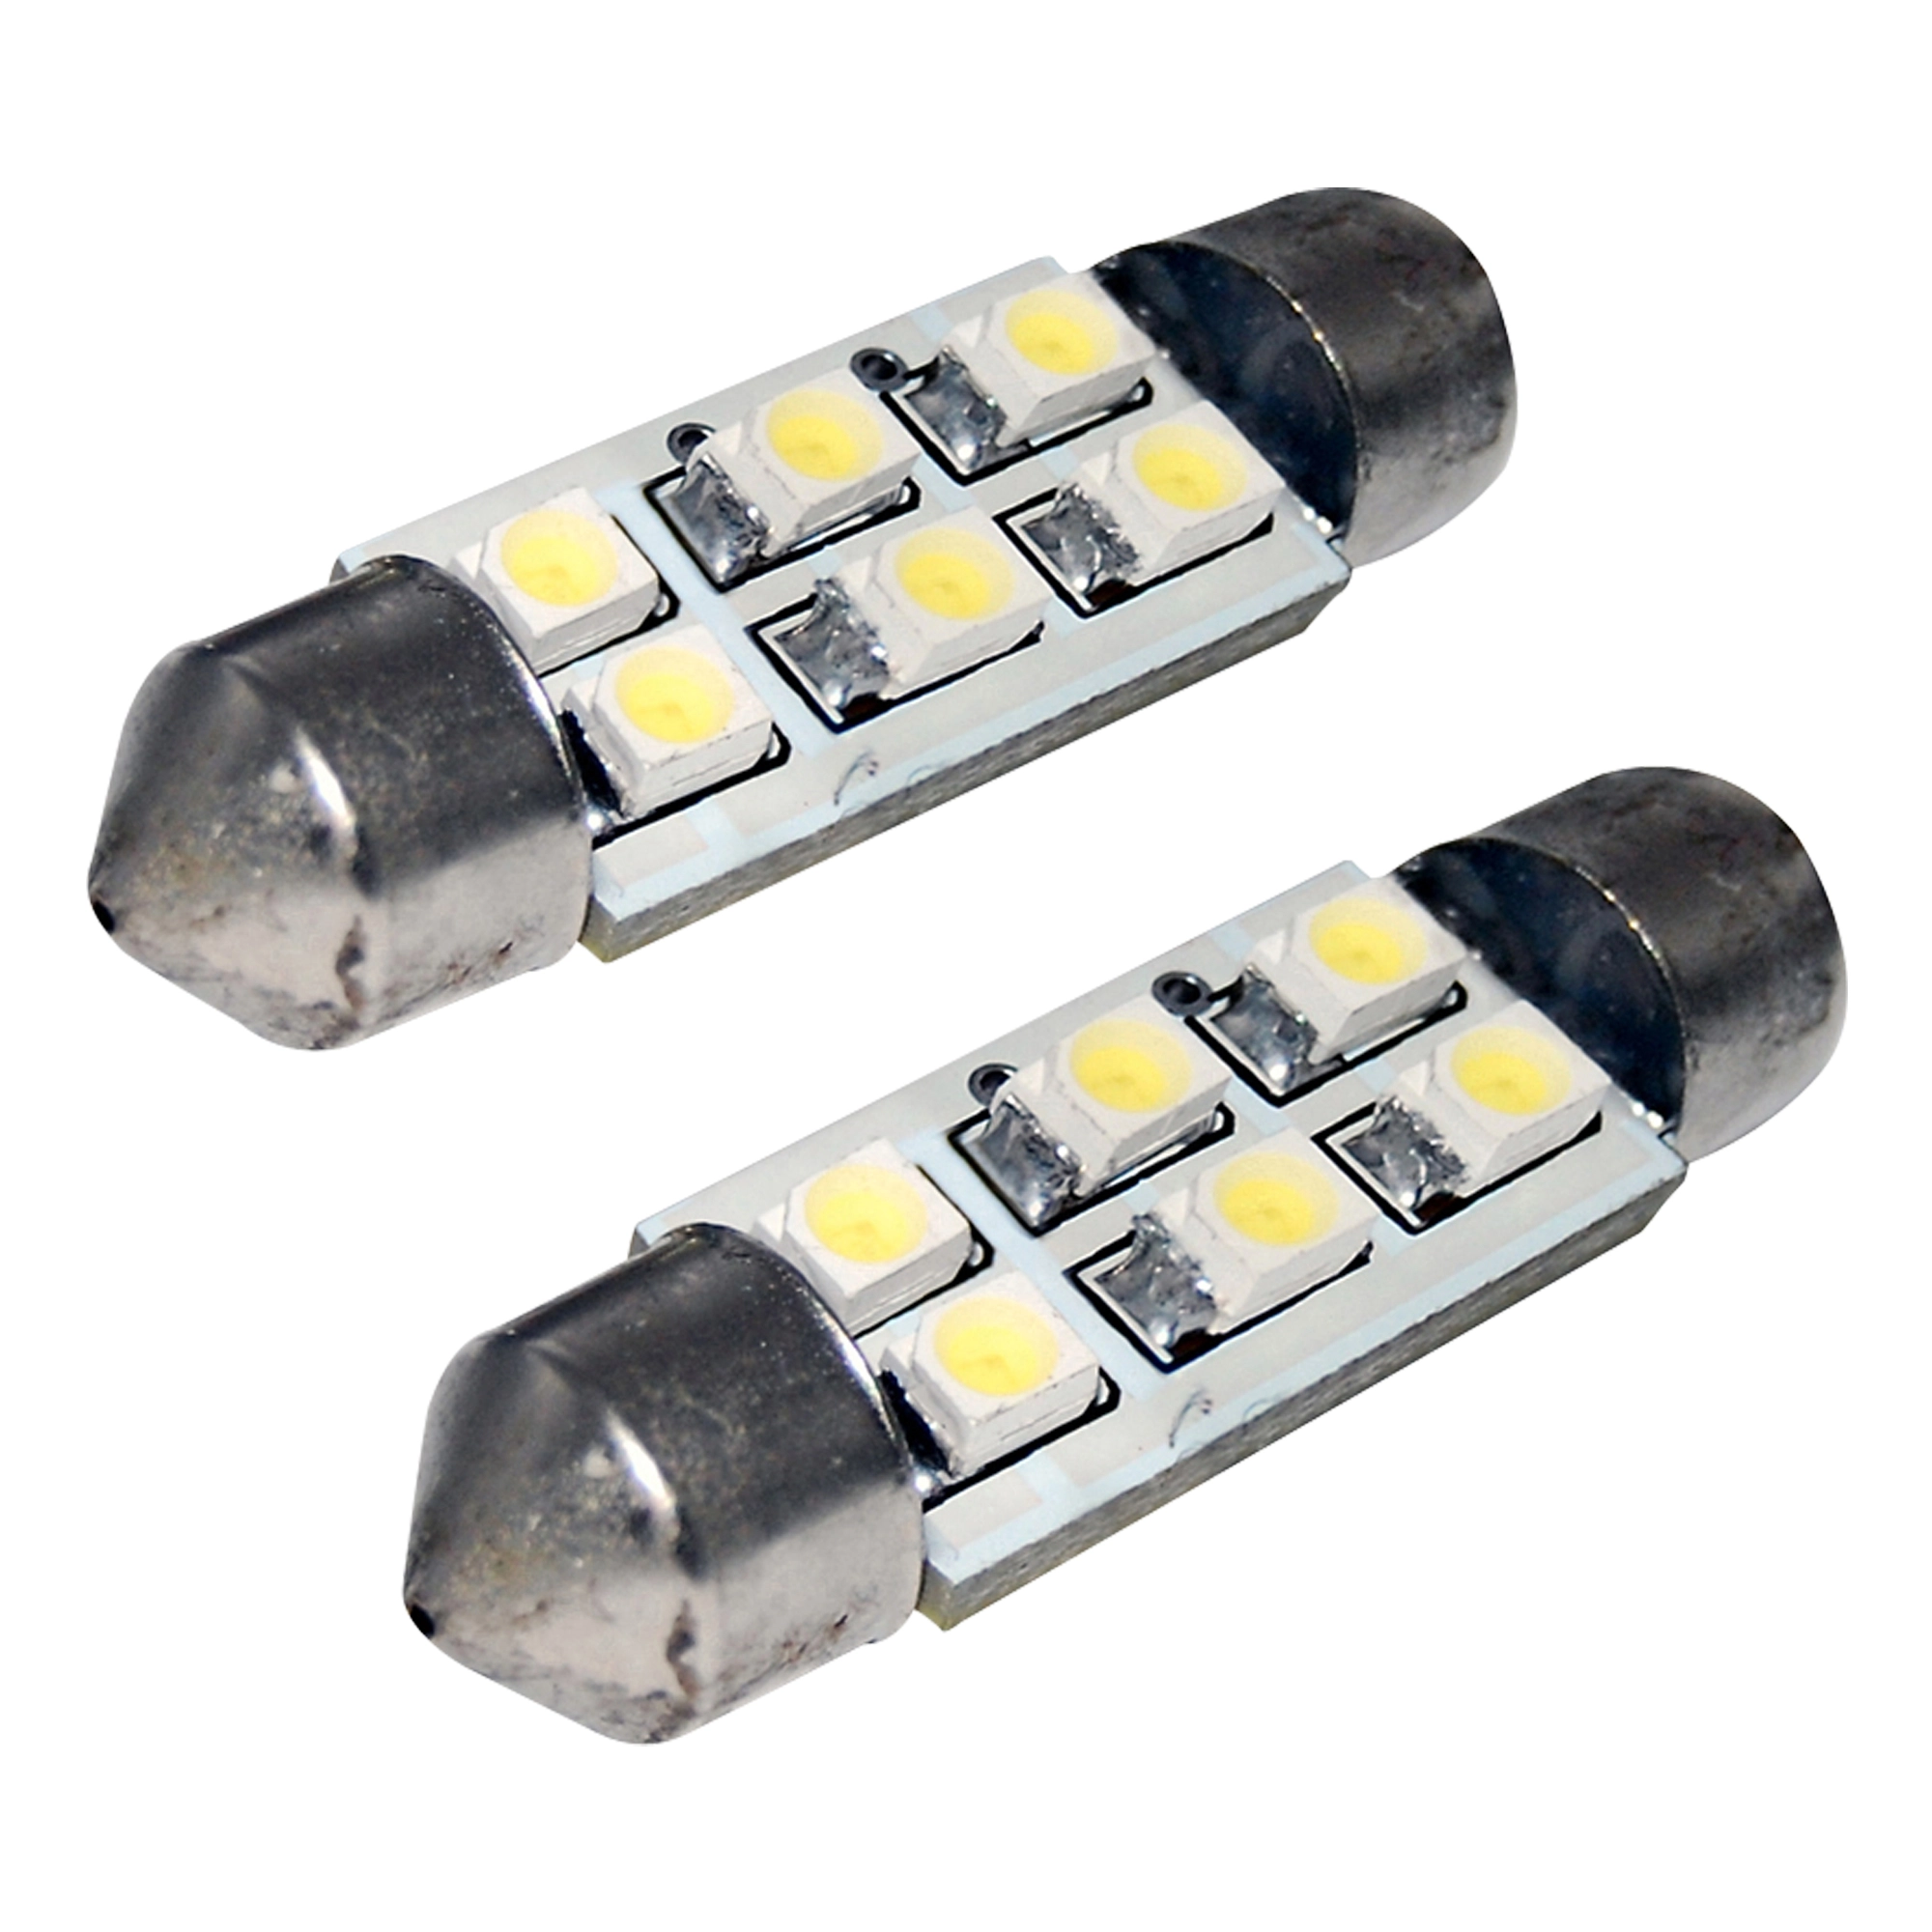 Eufab LED-Soffittenlampe SMD Weiß 41 mm 2 Stück kaufen bei OBI